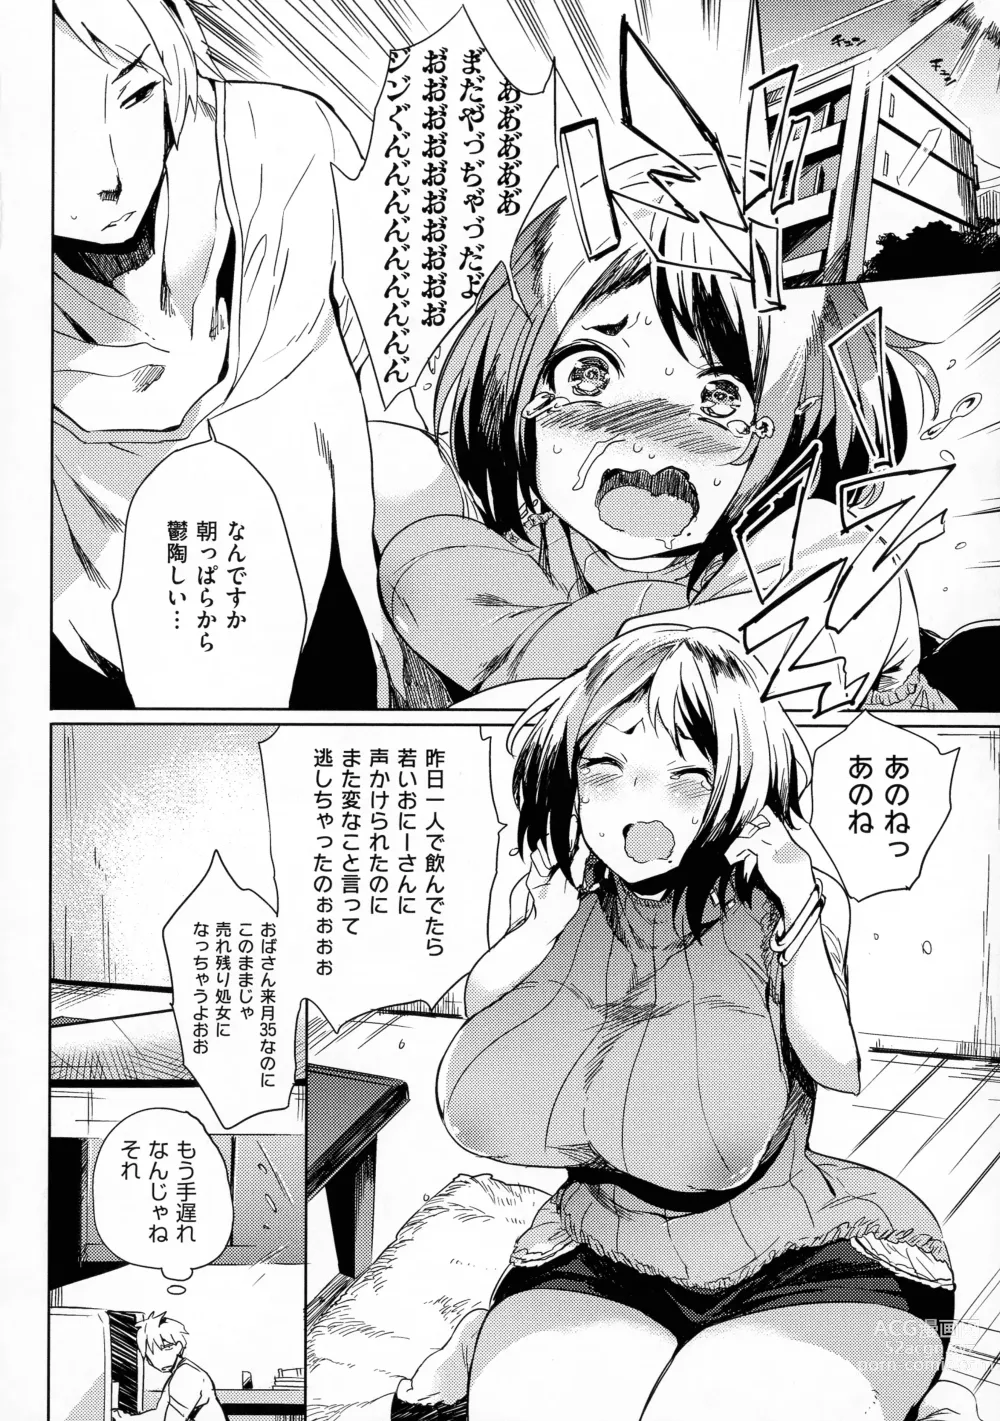 Page 26 of manga Daseiism